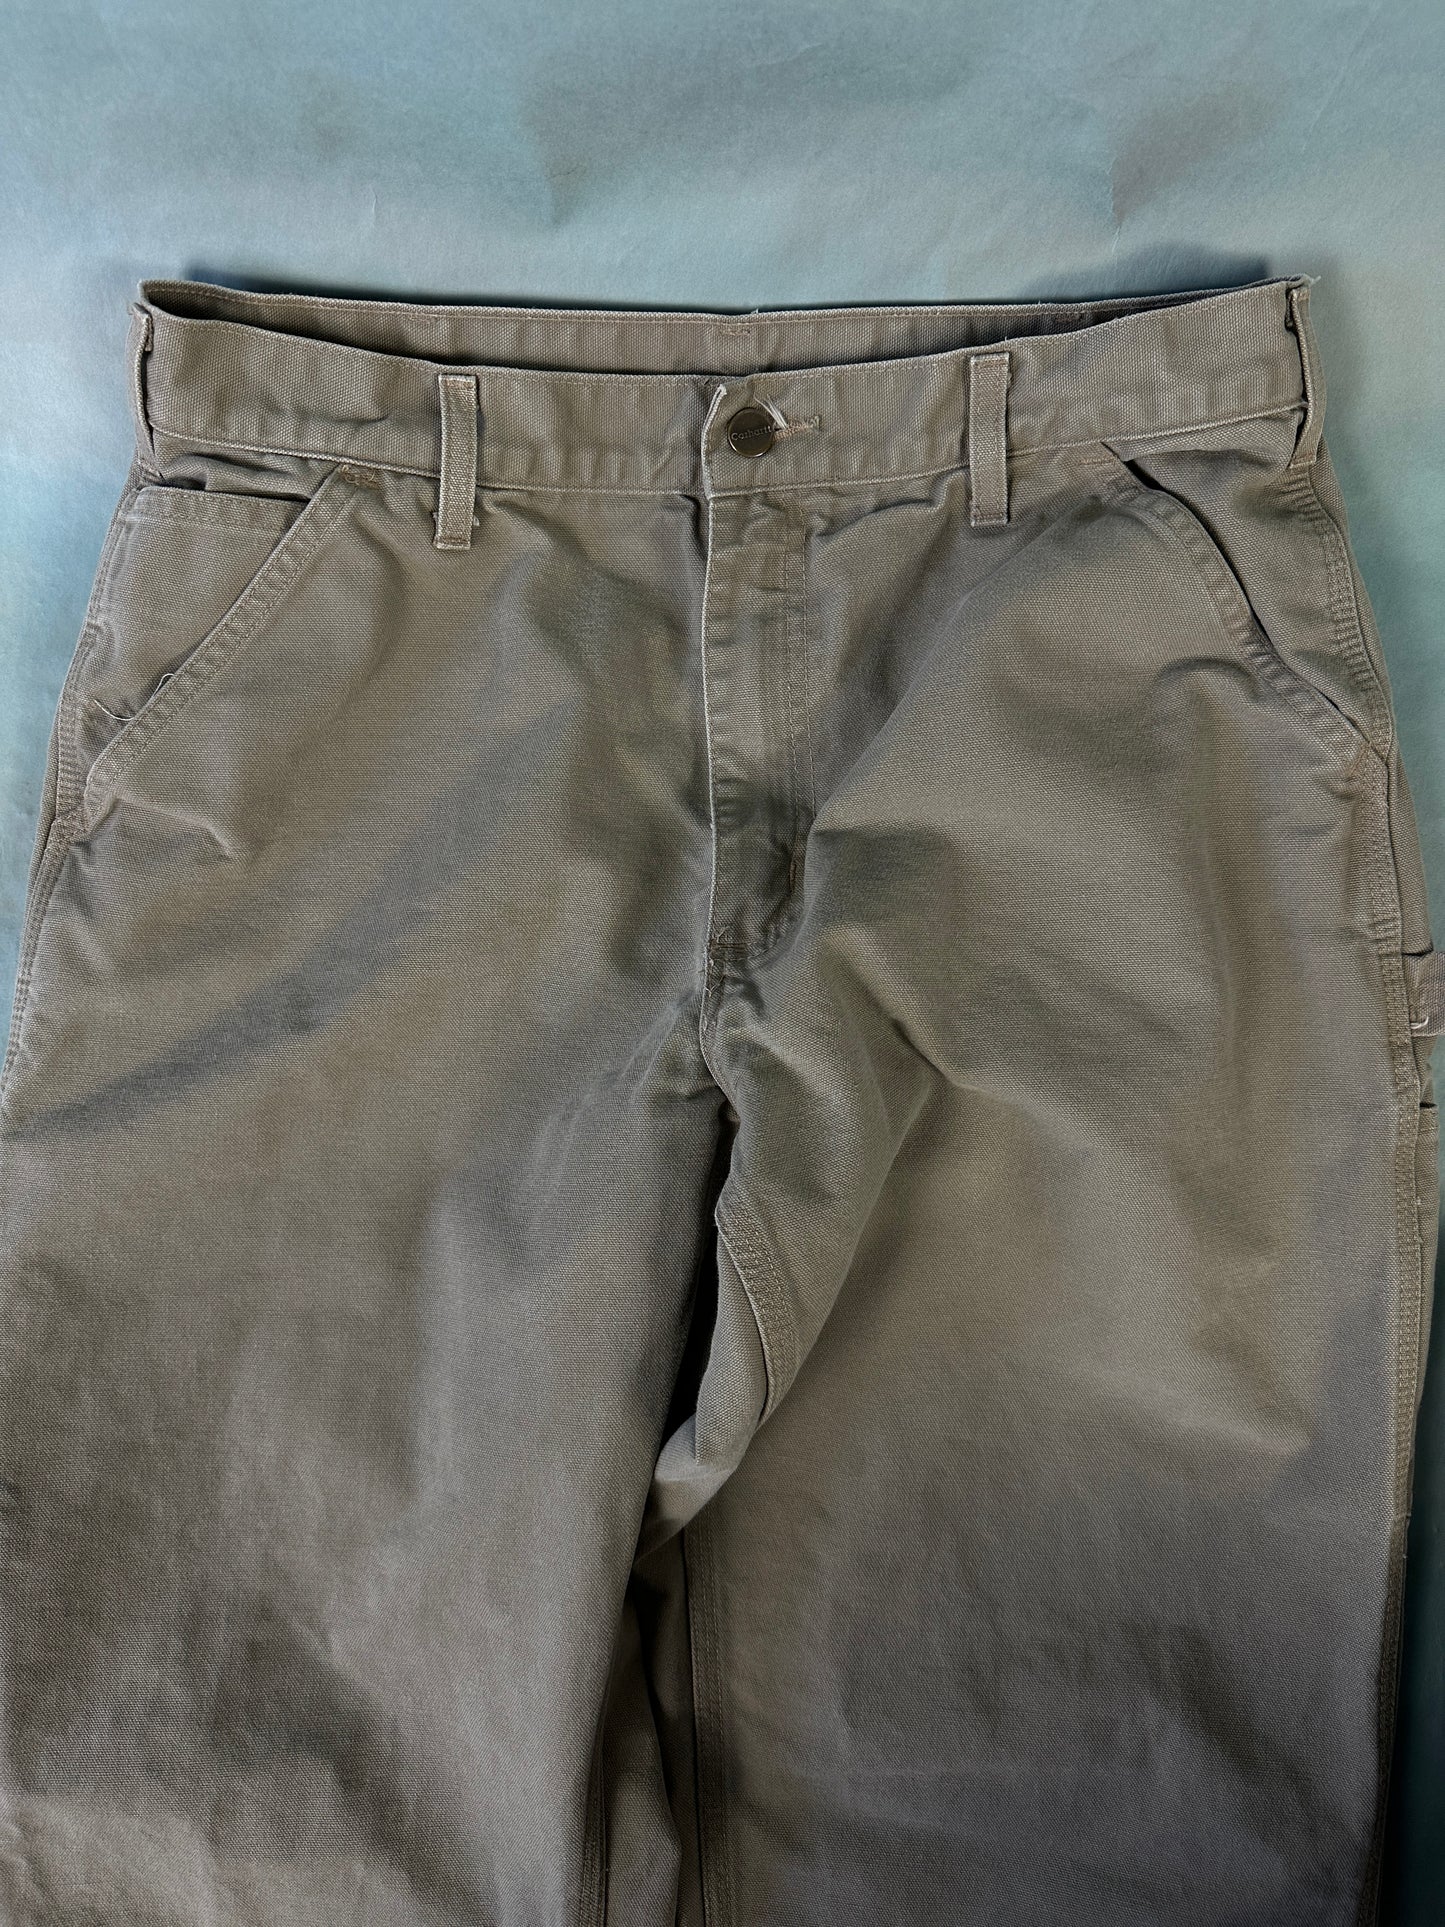 Carhartt Carpenter Vintage Pants - 34 x 32